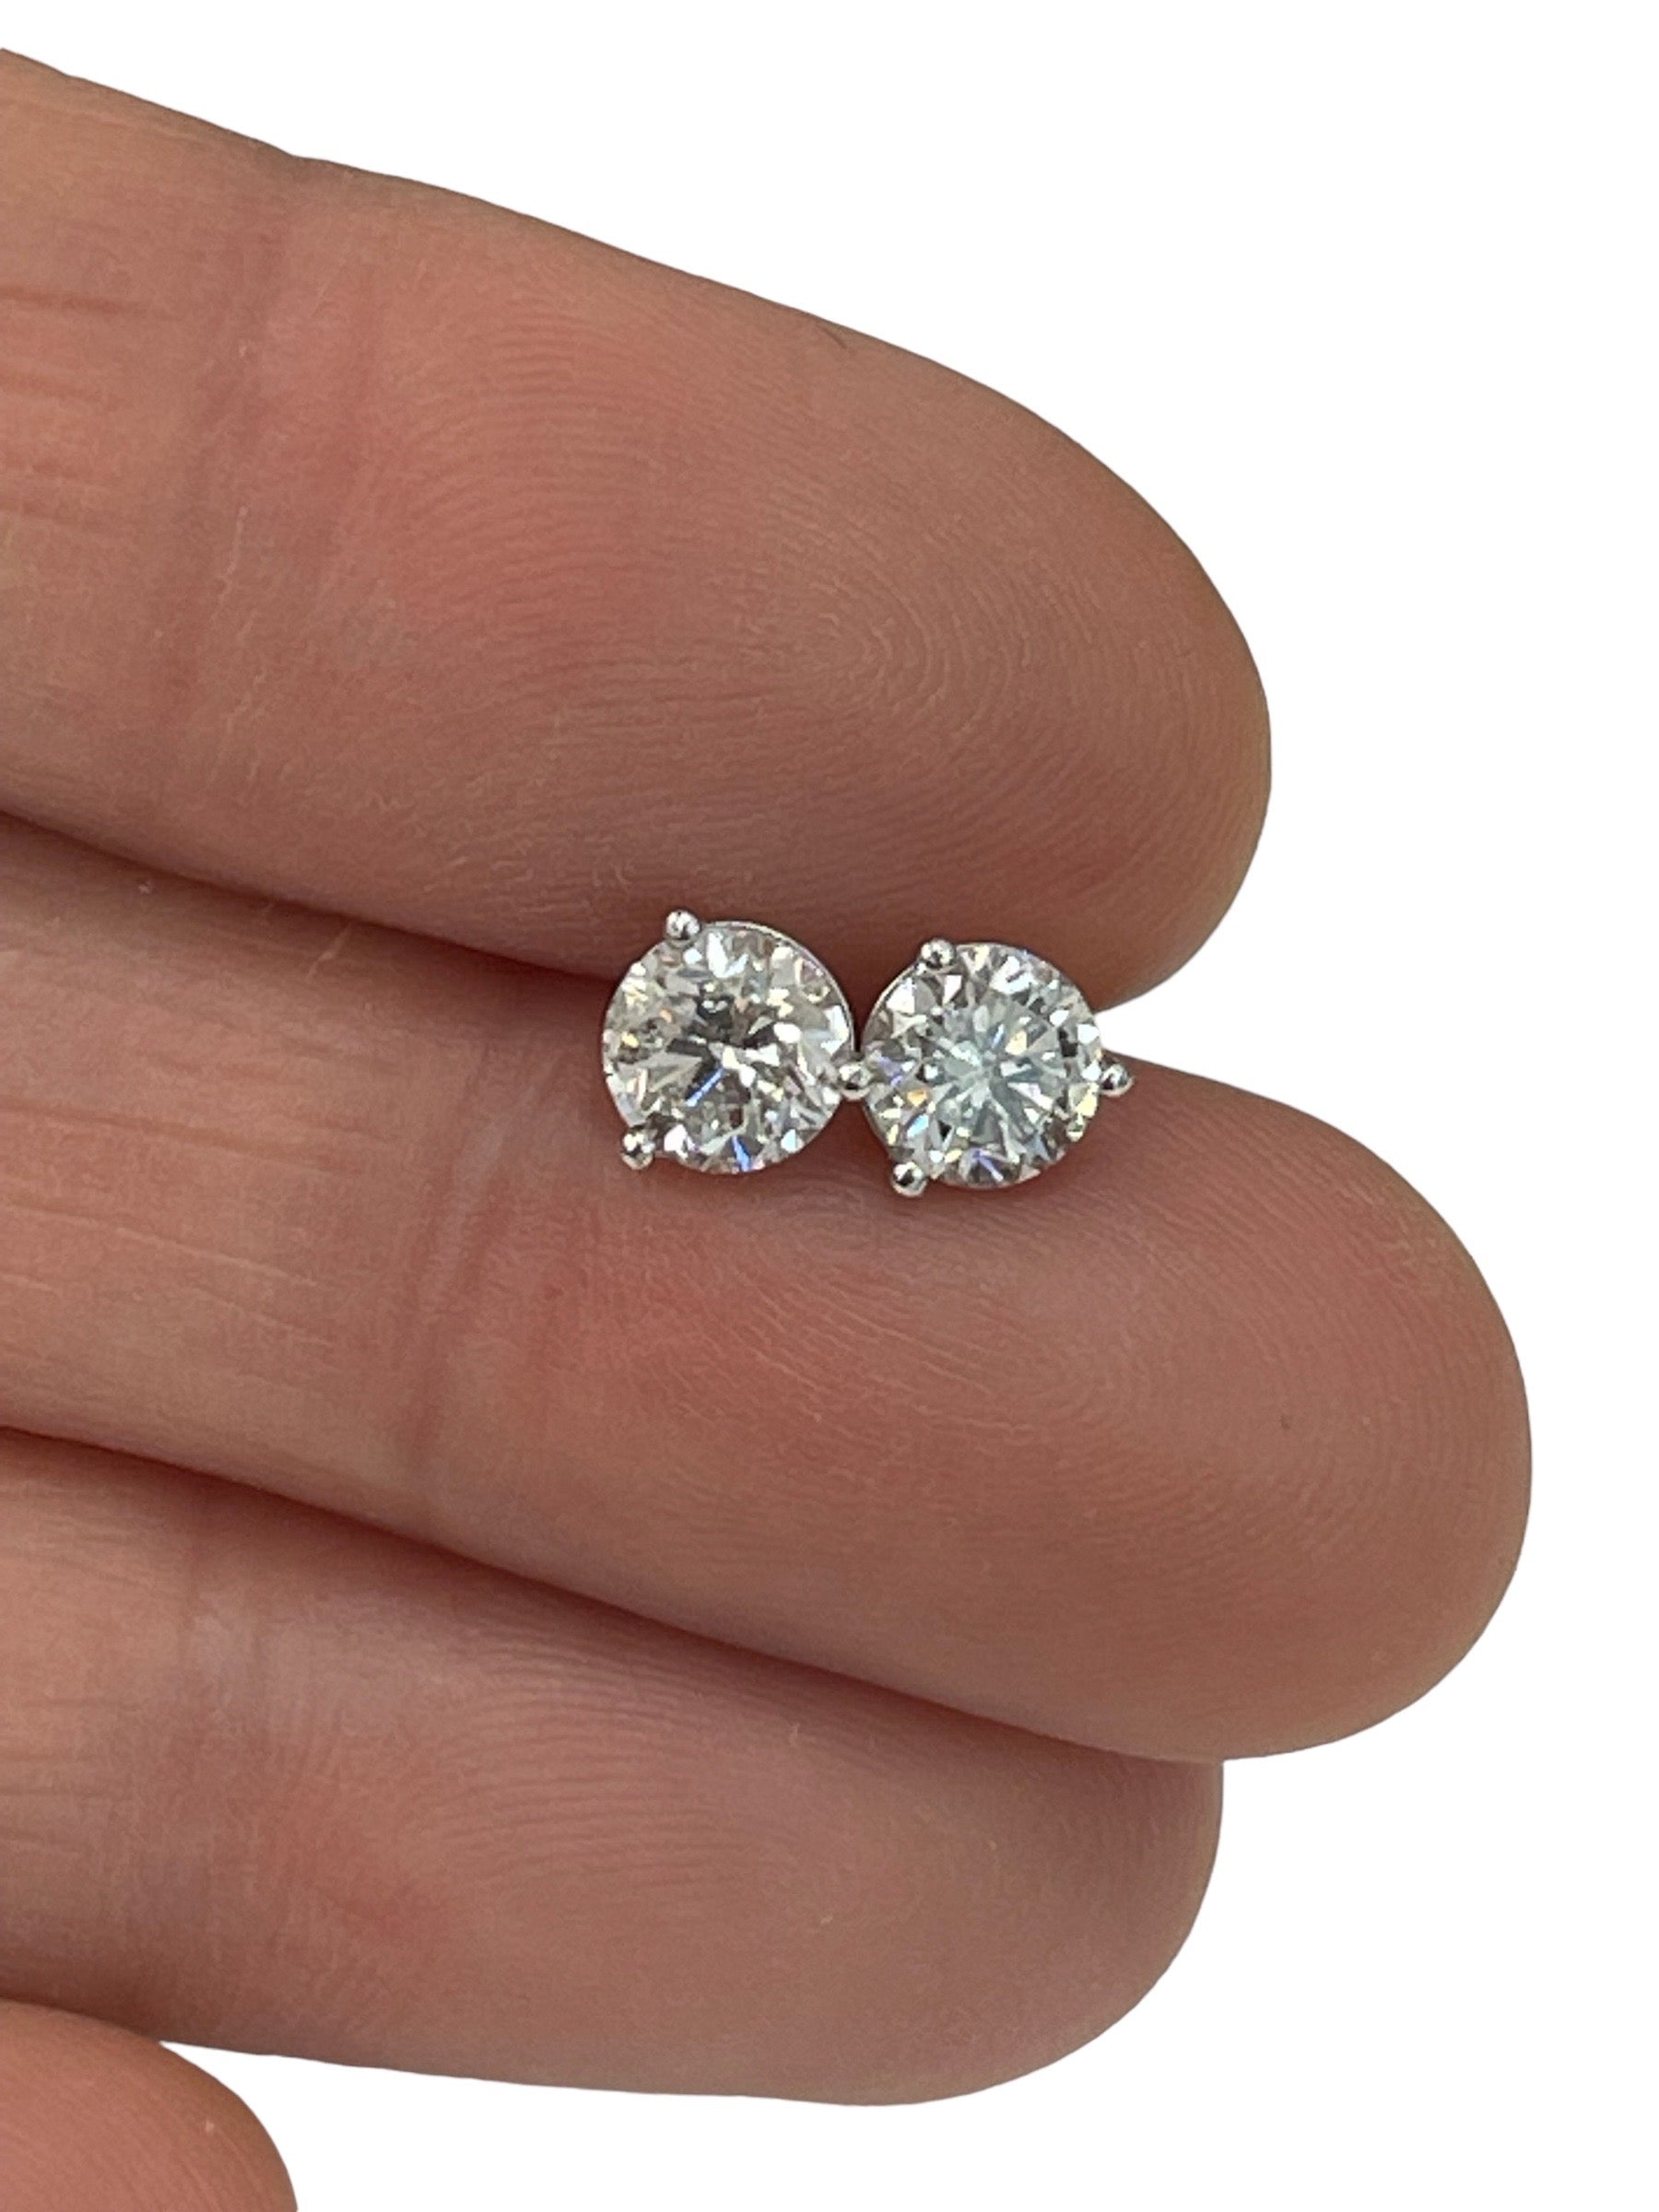 Round Brilliants Stud Diamond Earrings 1.02 Carats